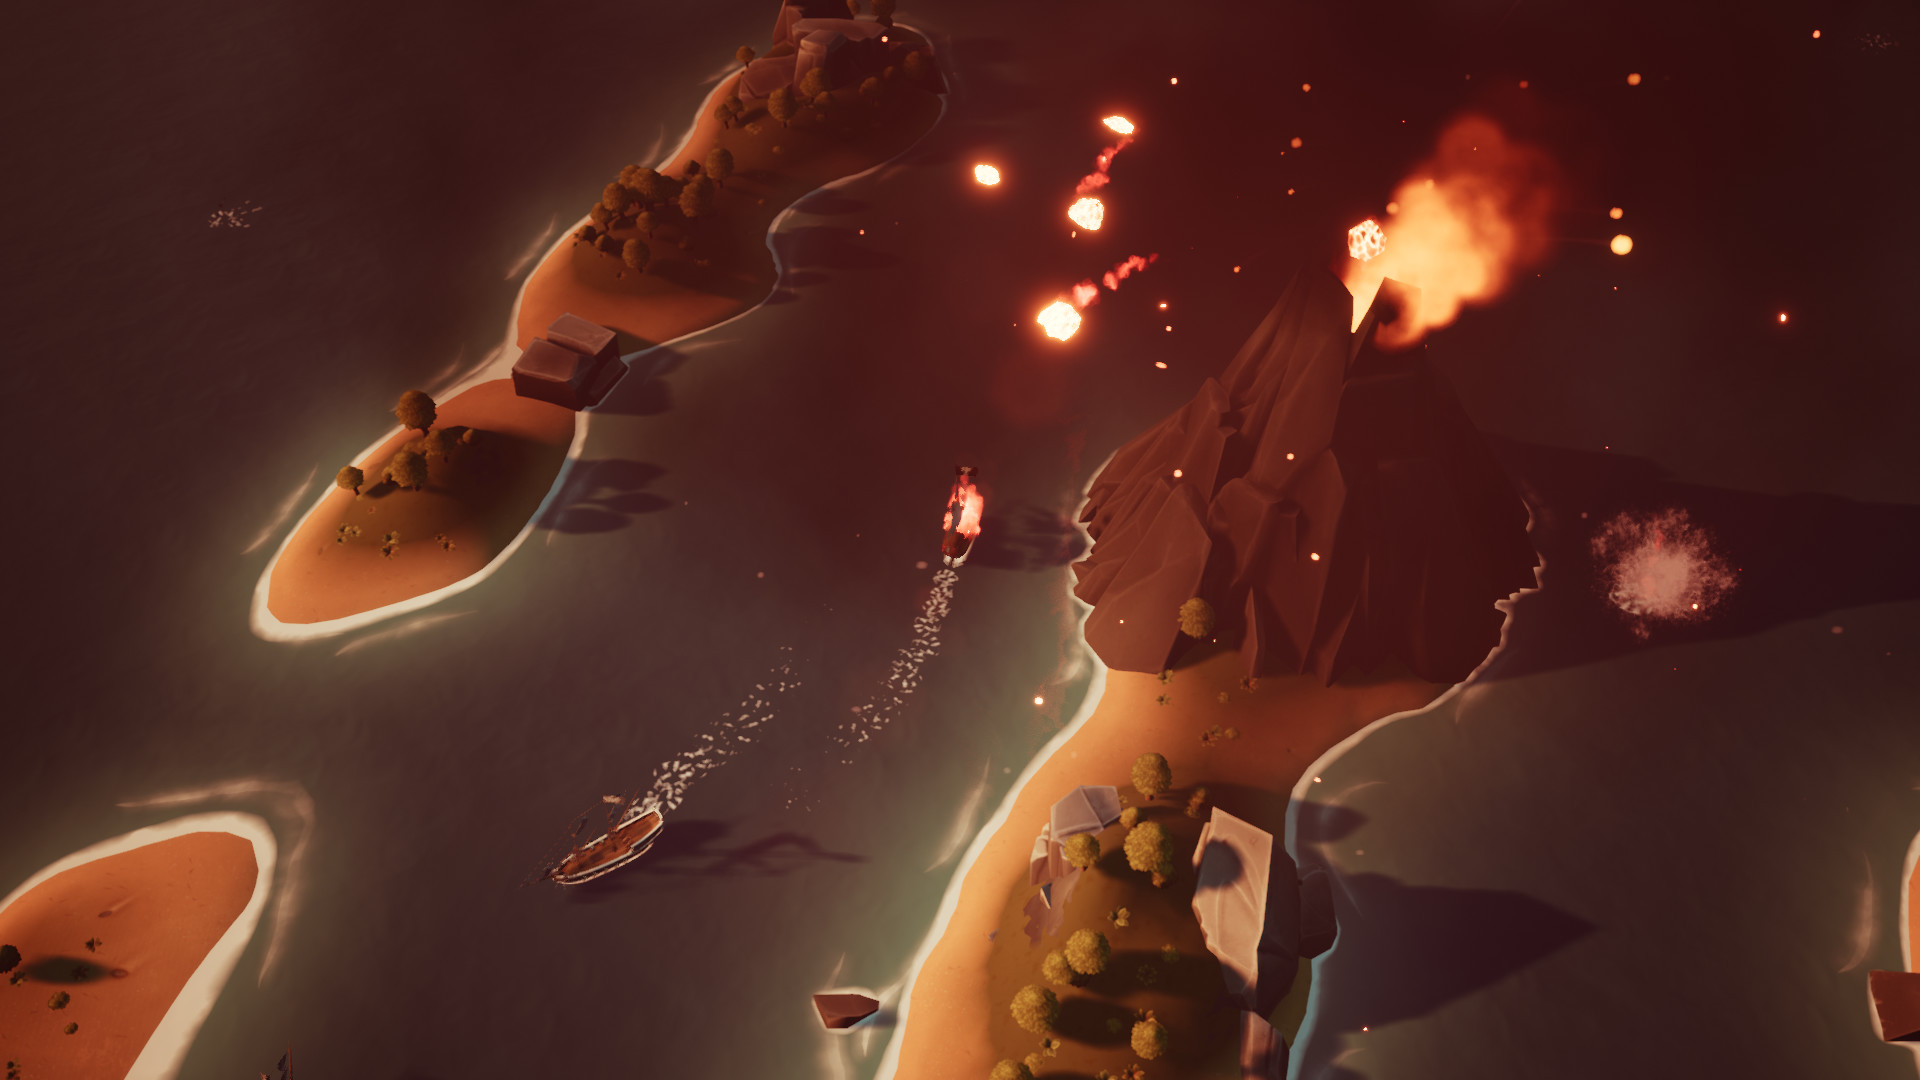 King of Seas - screenshot 3